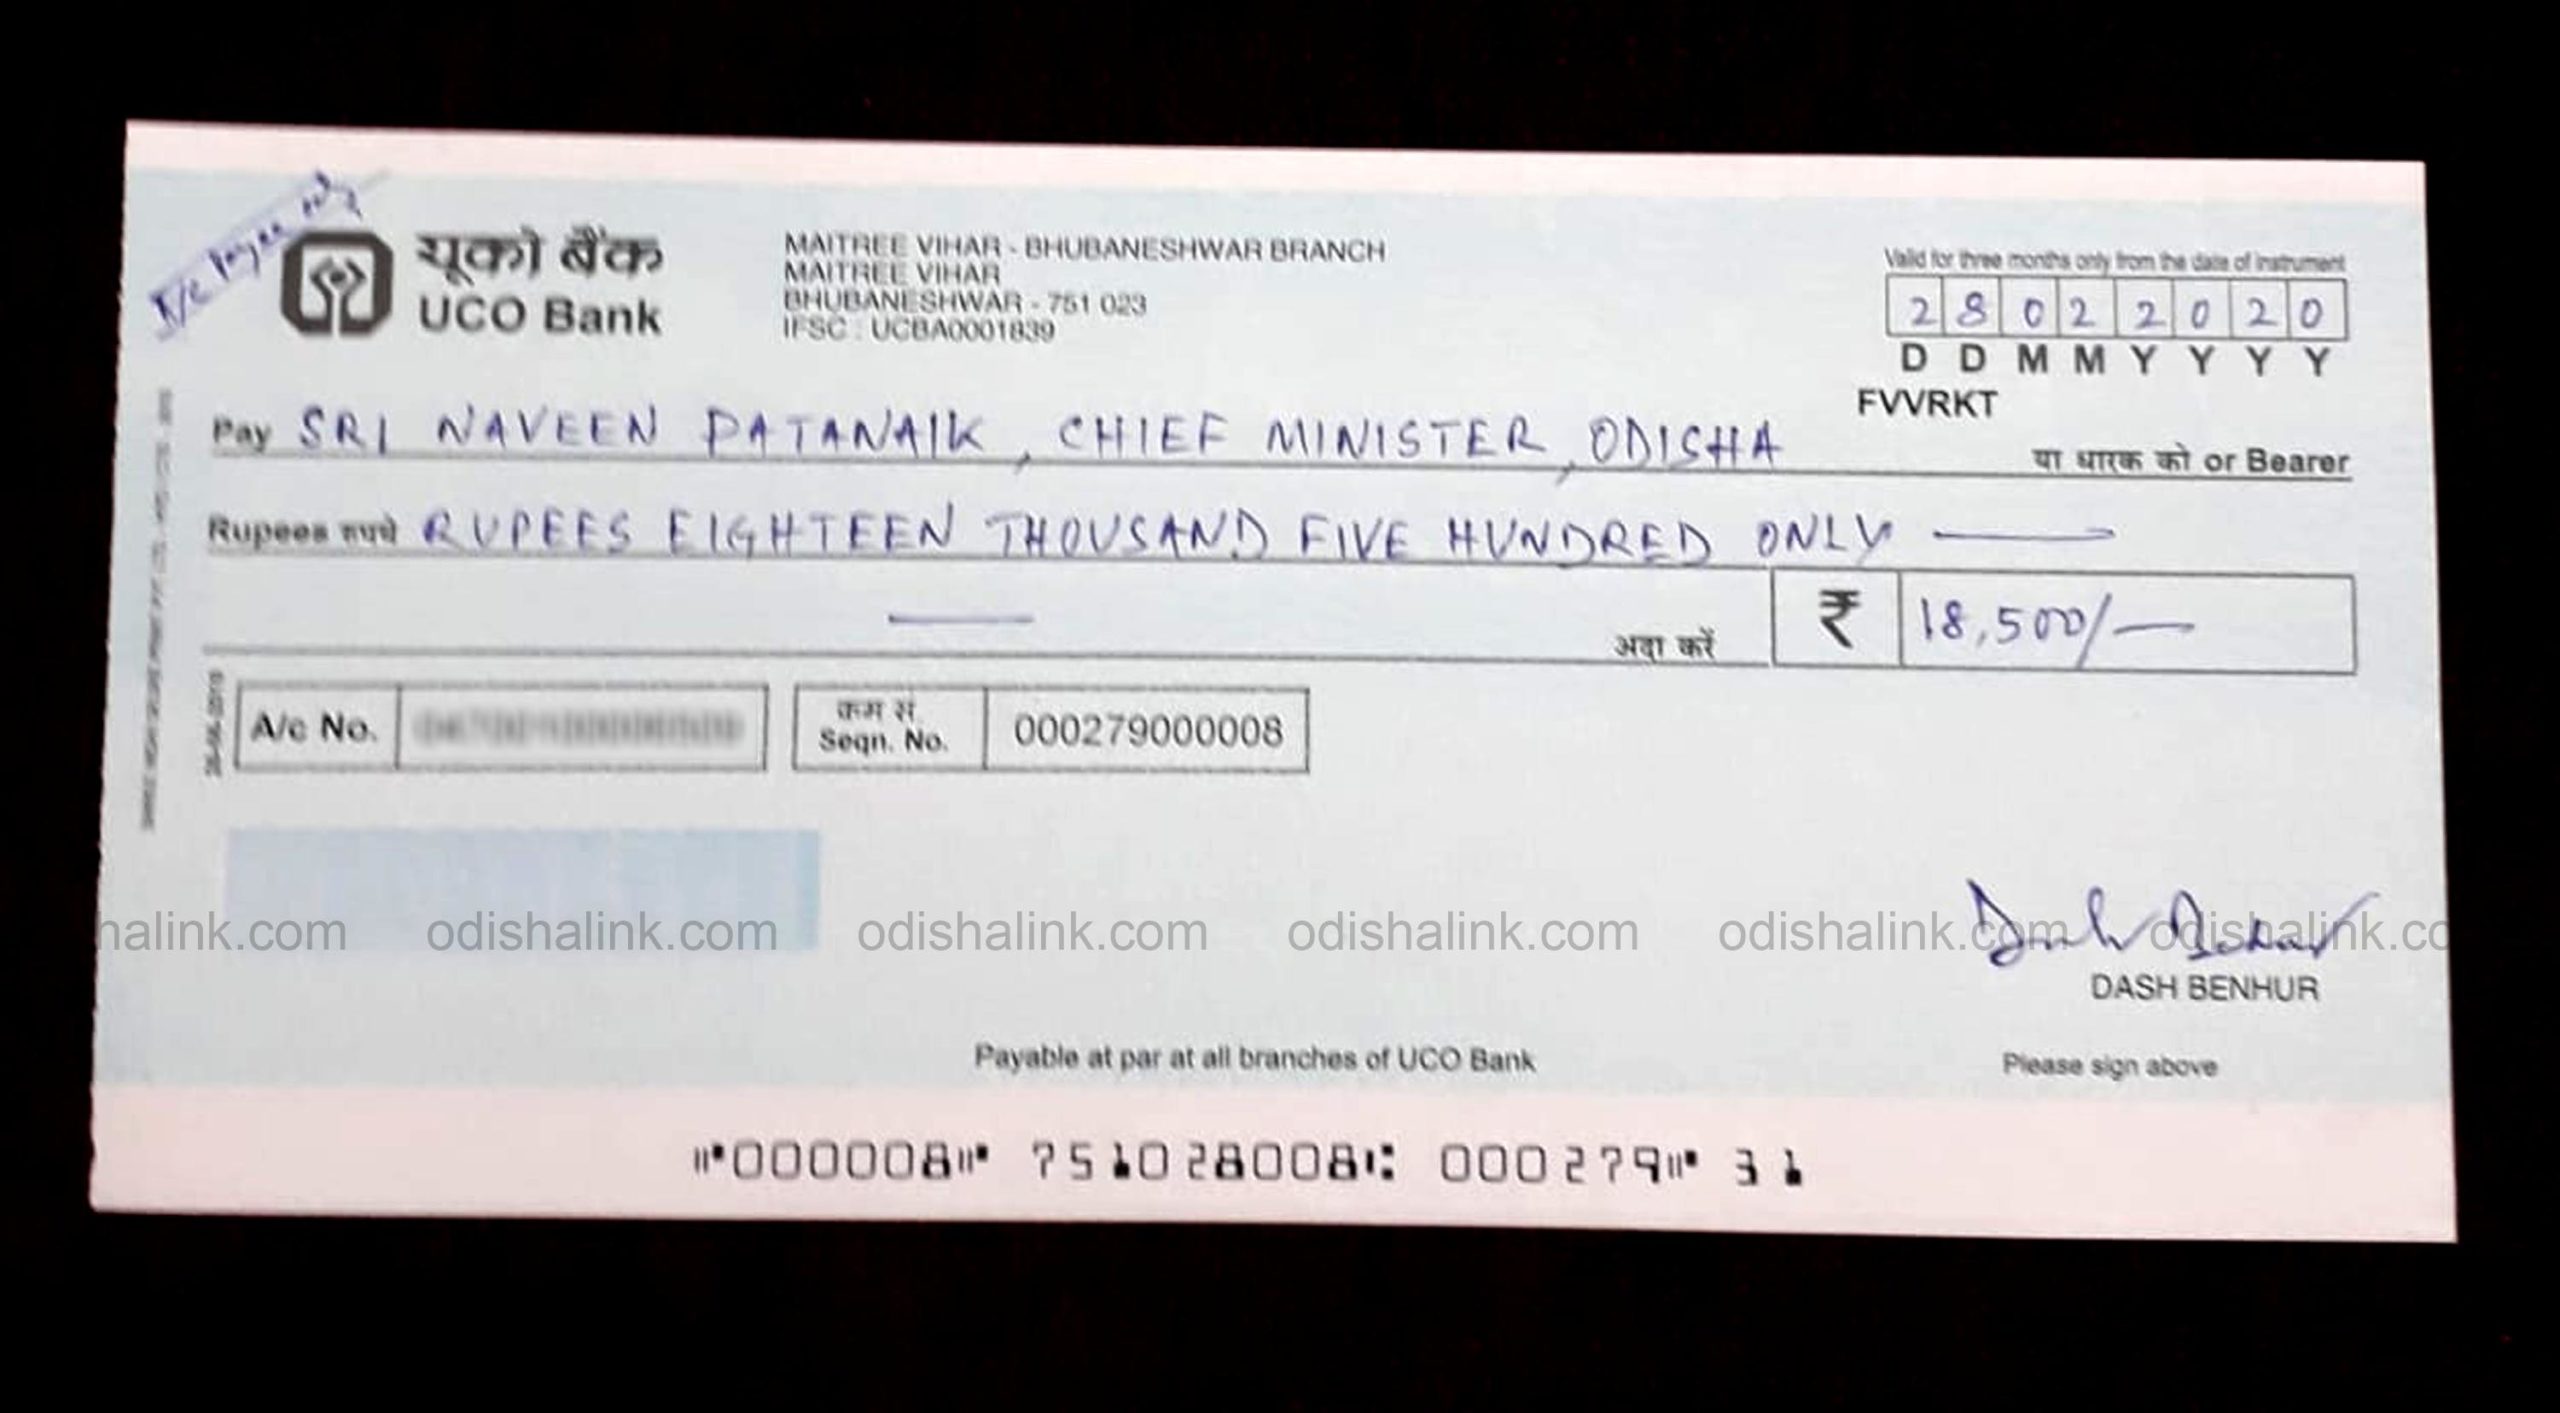 Dash benhur sends cheque to Naveen Patnaik scaled